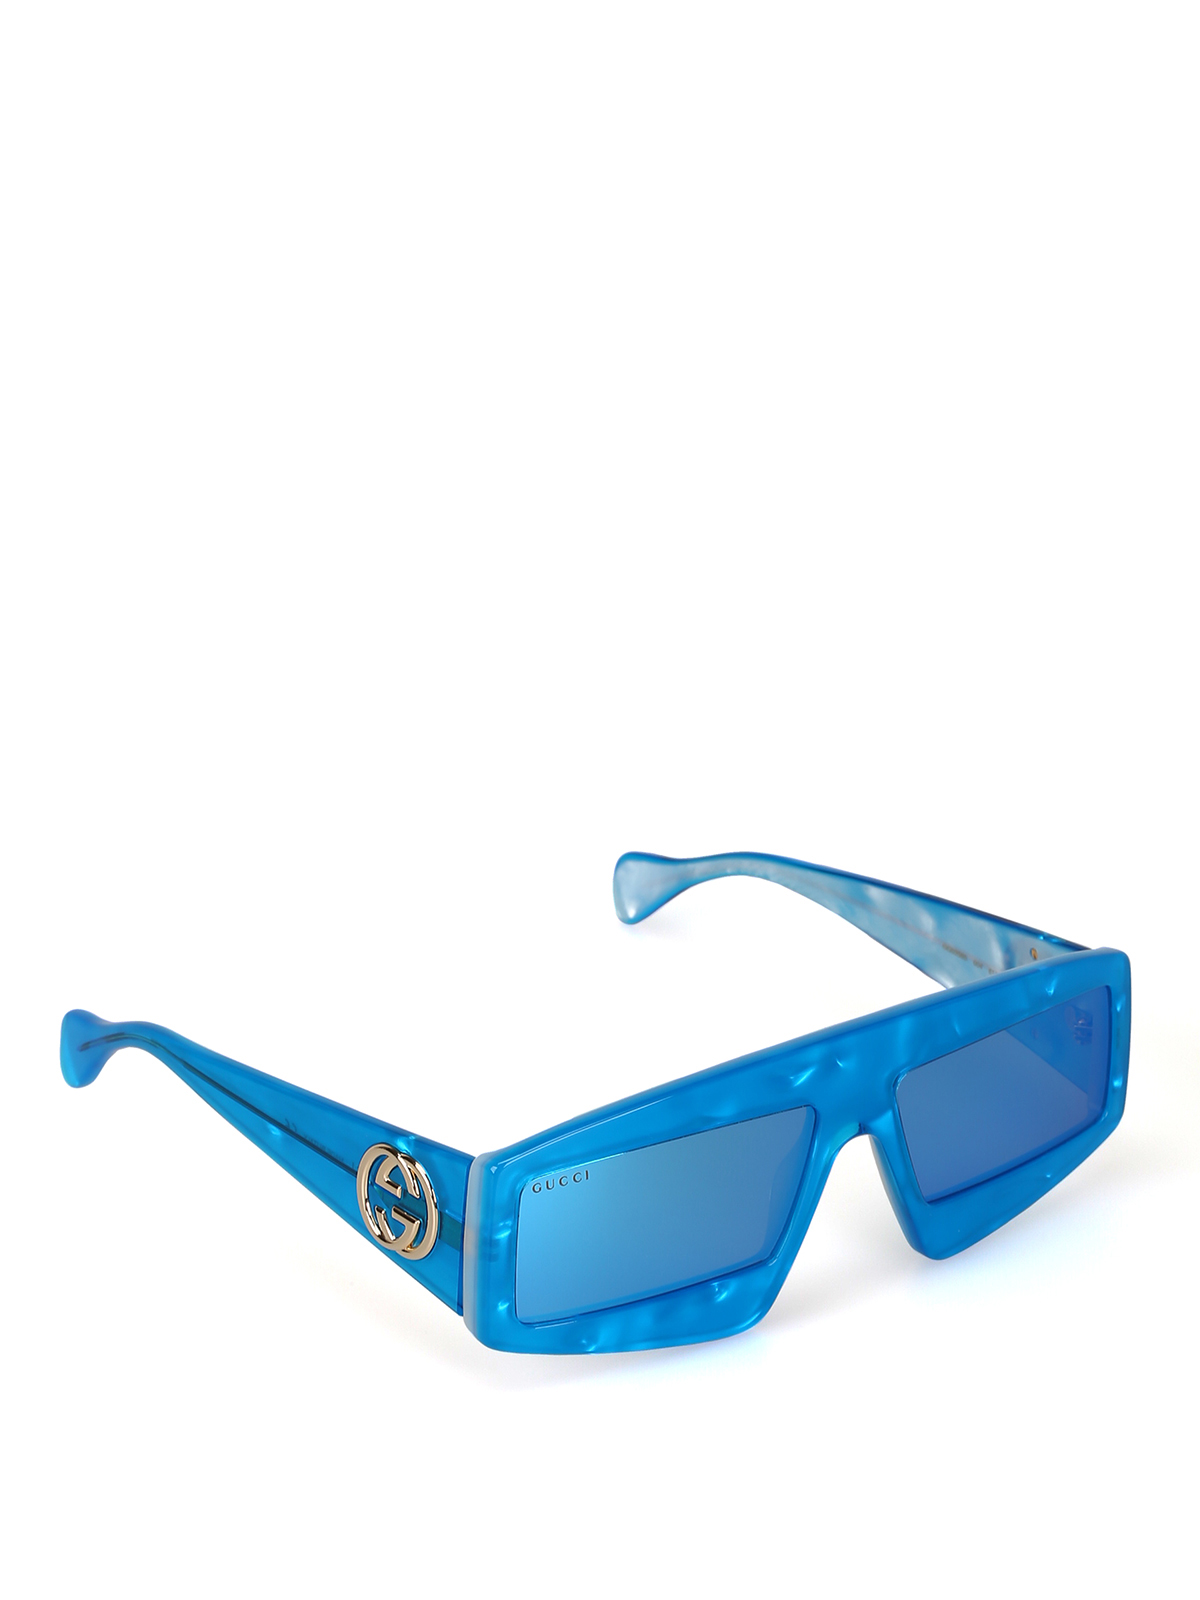 Sunglasses Gucci - Pearly light blue sunglasses - GG0358S004 